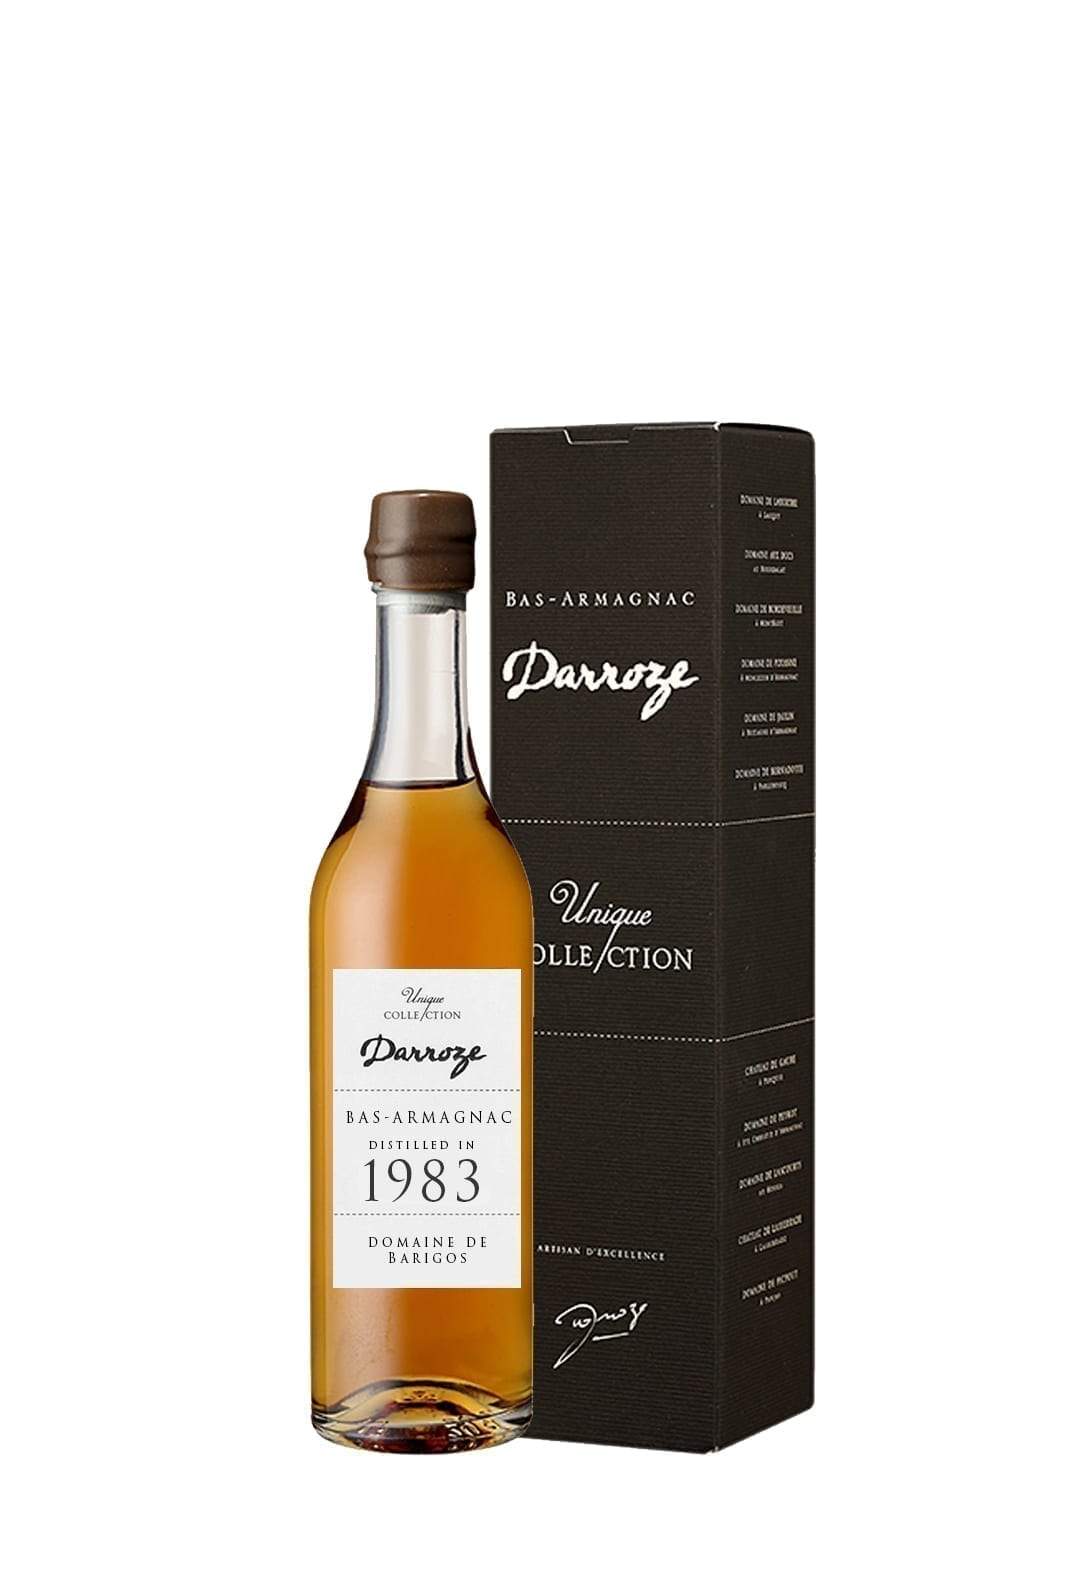 Darroze 1983 Barigos Bas Armagnac 45% 200ml | Brandy | Shop online at Spirits of France